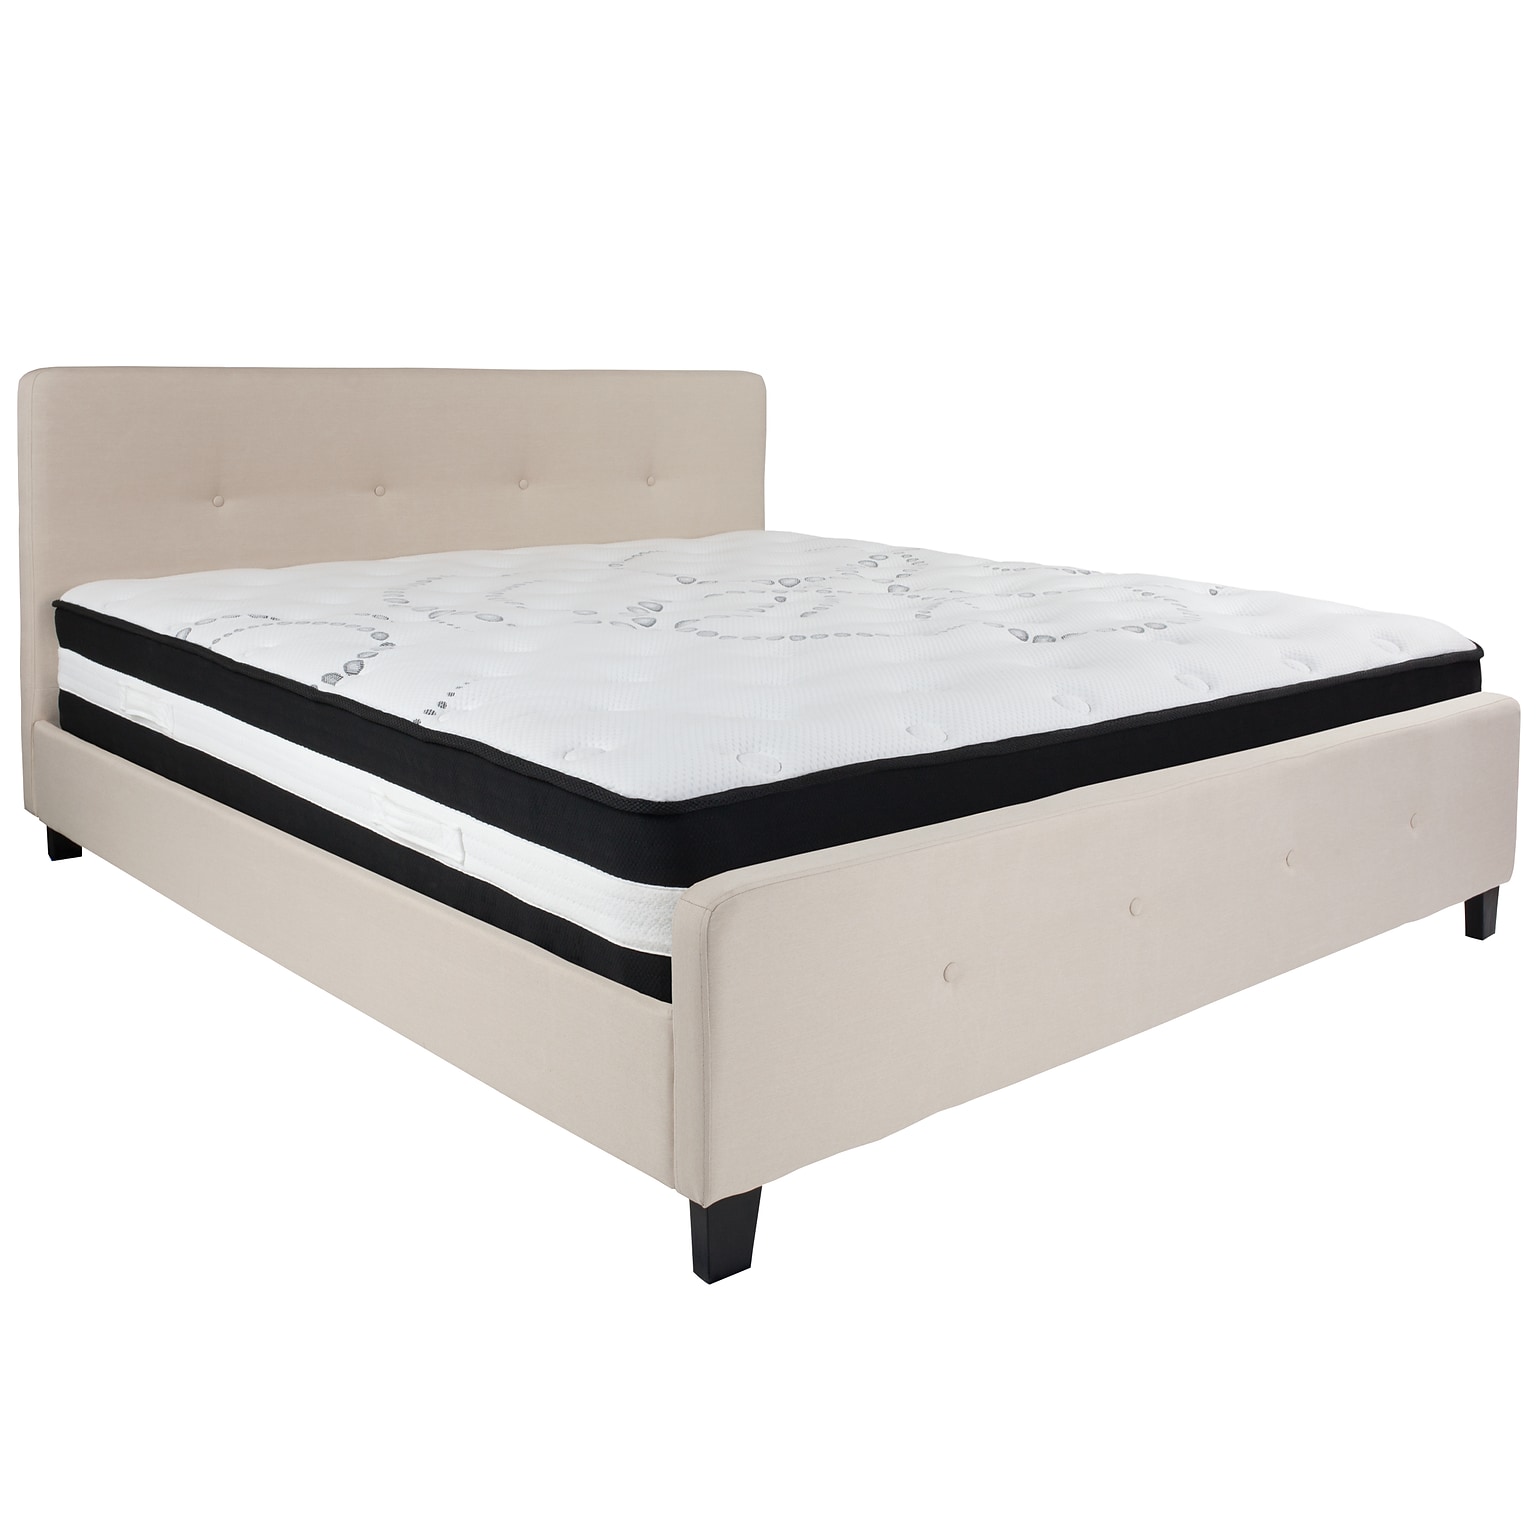 Flash Furniture Tribeca Tufted Upholstered Platform Bed in Beige Fabric with Pocket Spring Mattress, King (HGBM20)